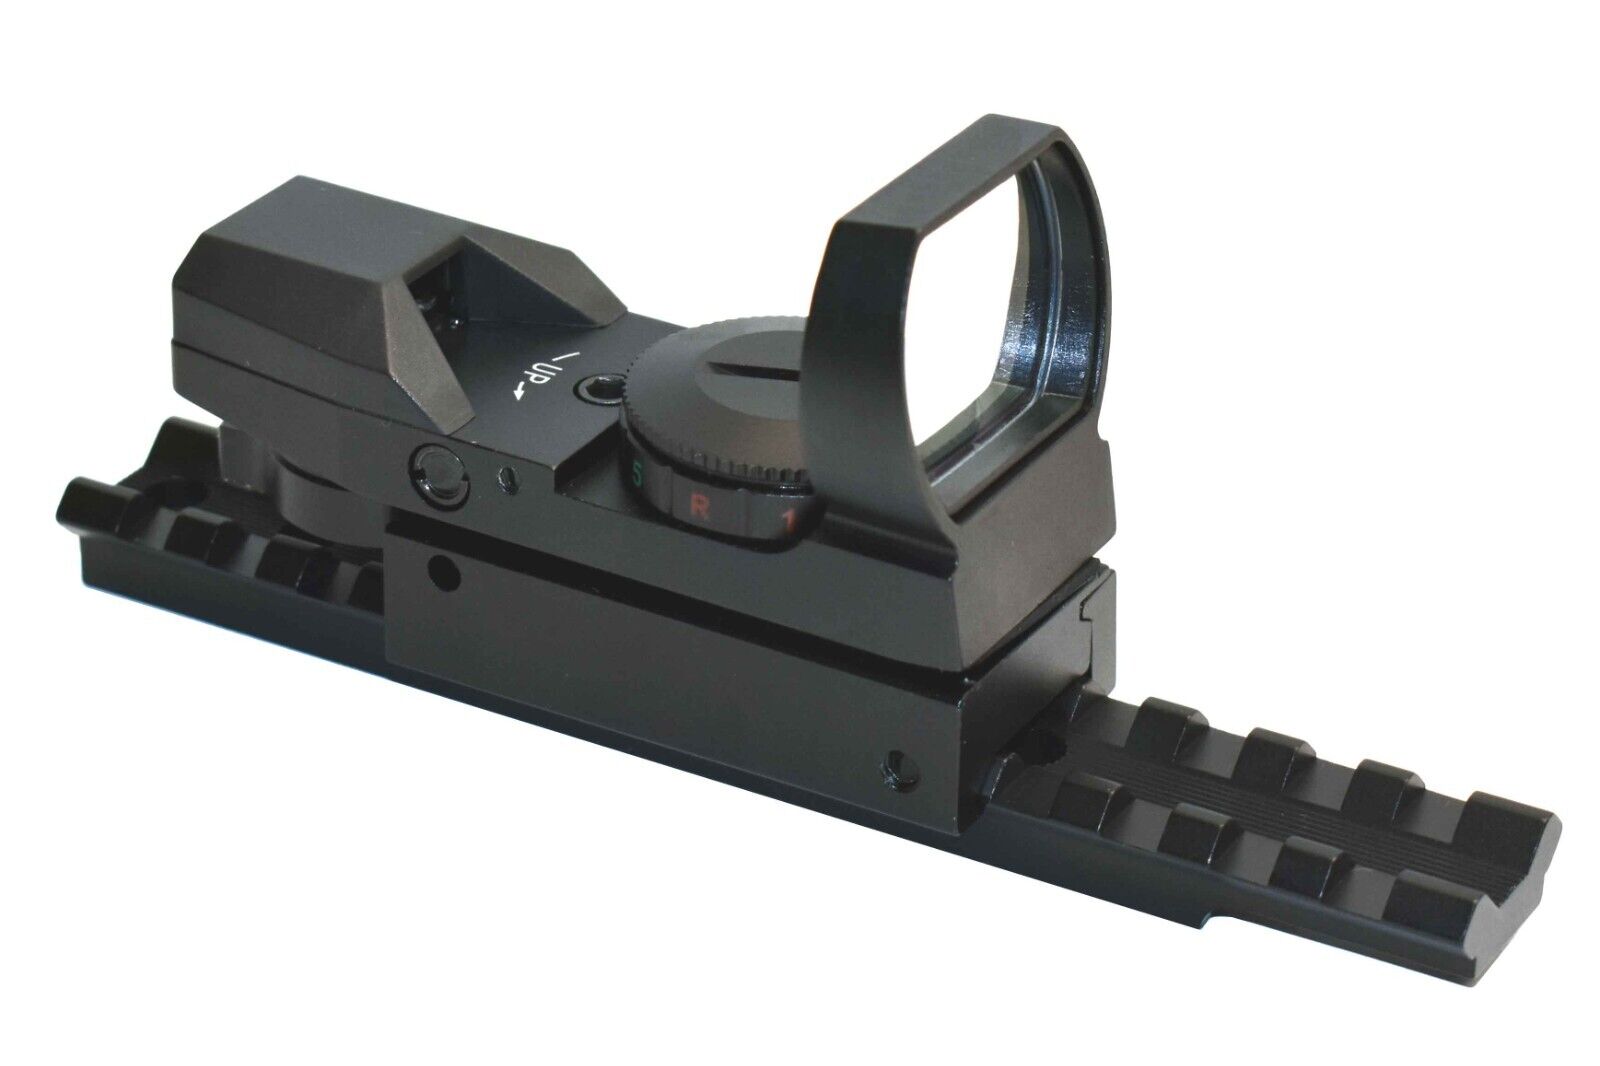 reflex sight and mount adapter for winchester 1300 shotgun.